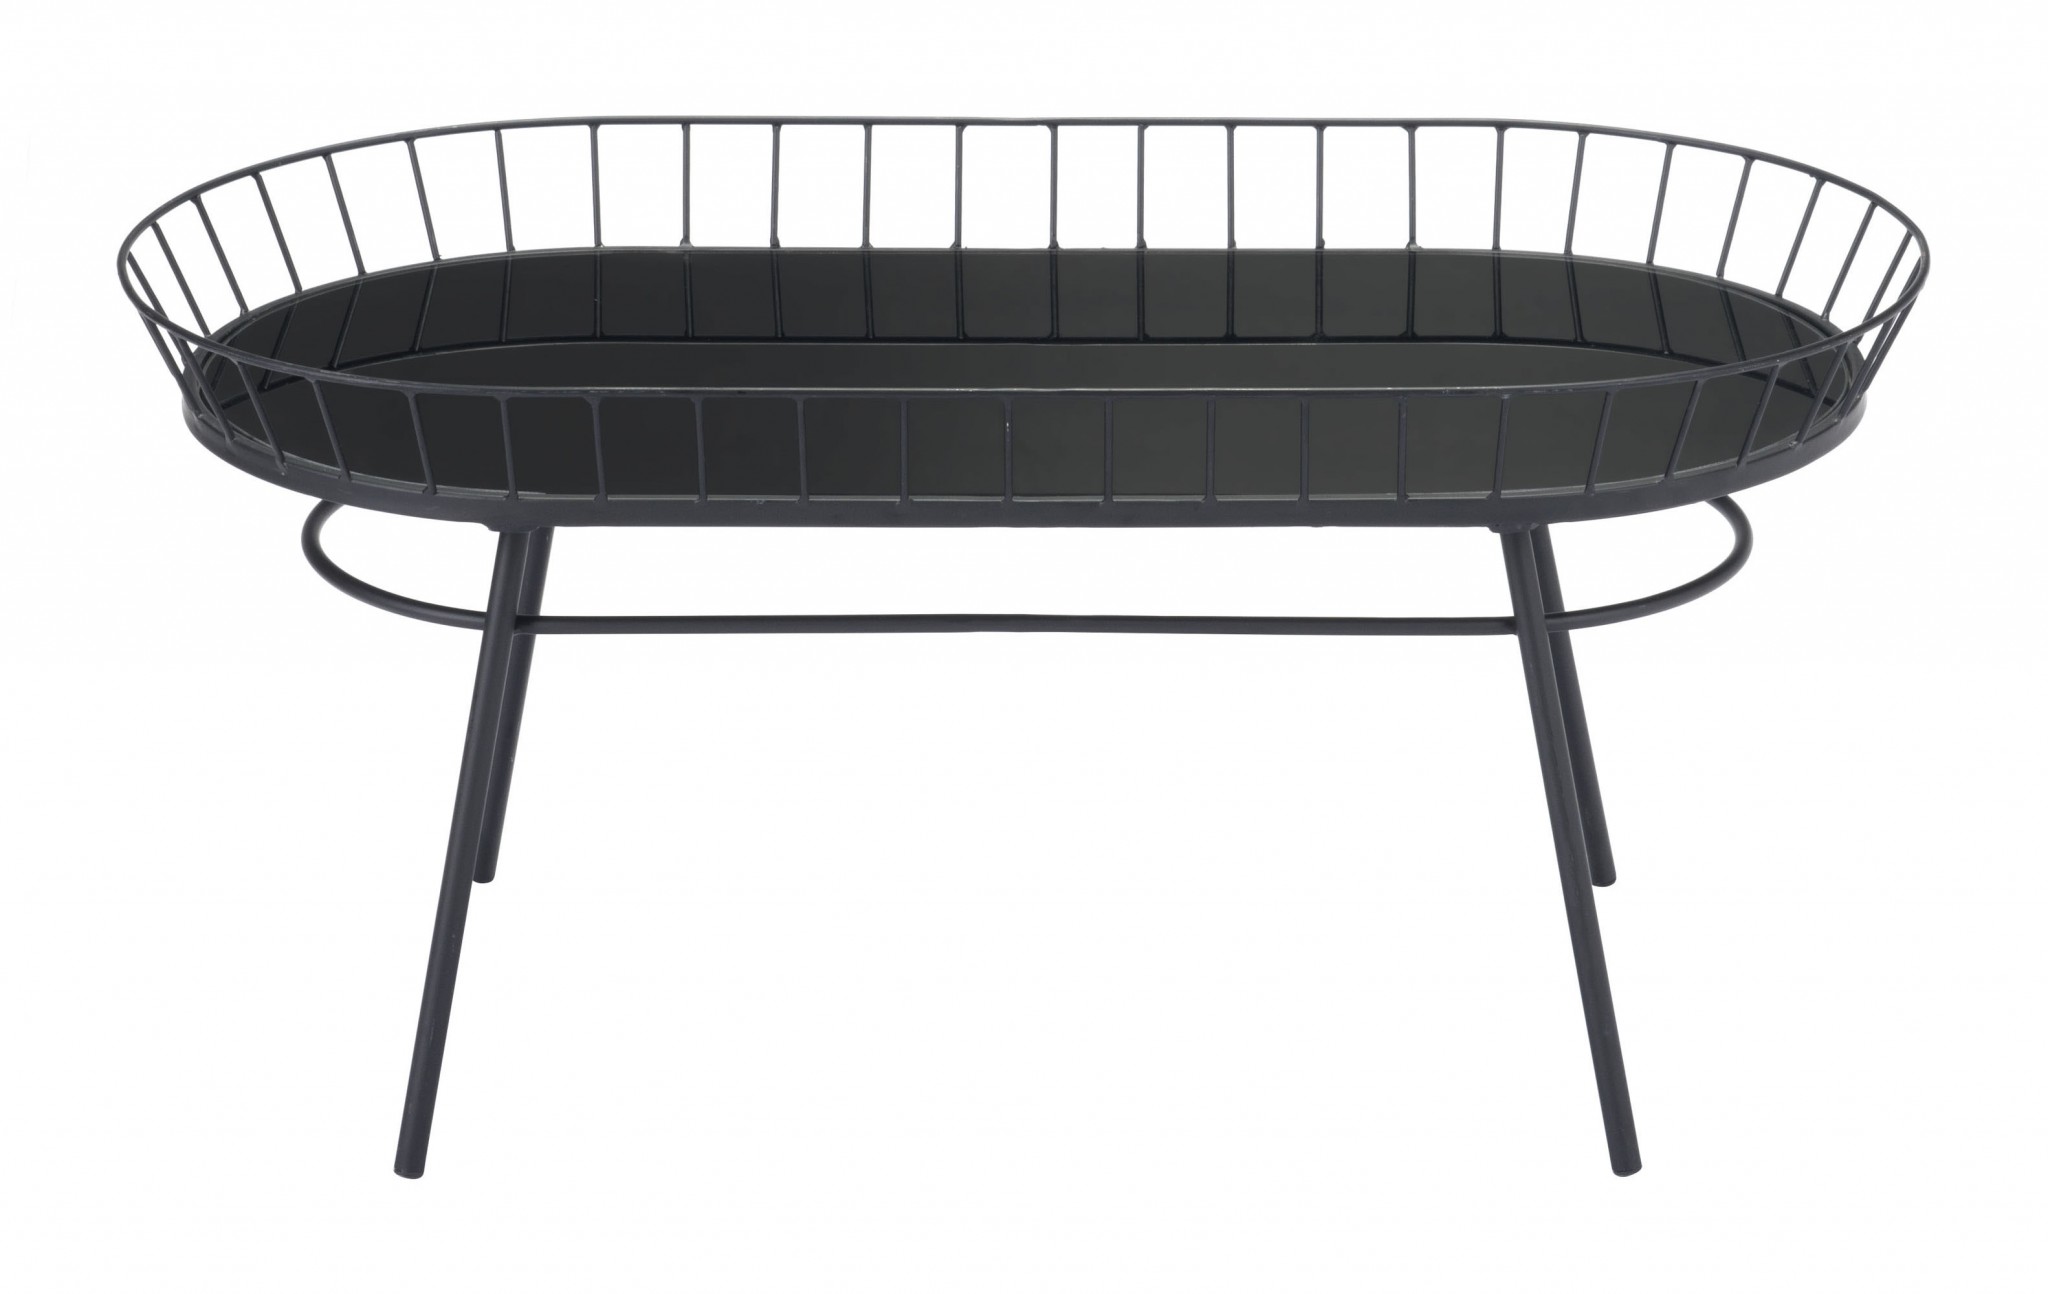 31.5" x 16.3" x 14.6" Black, Steel & Glass, Side Table